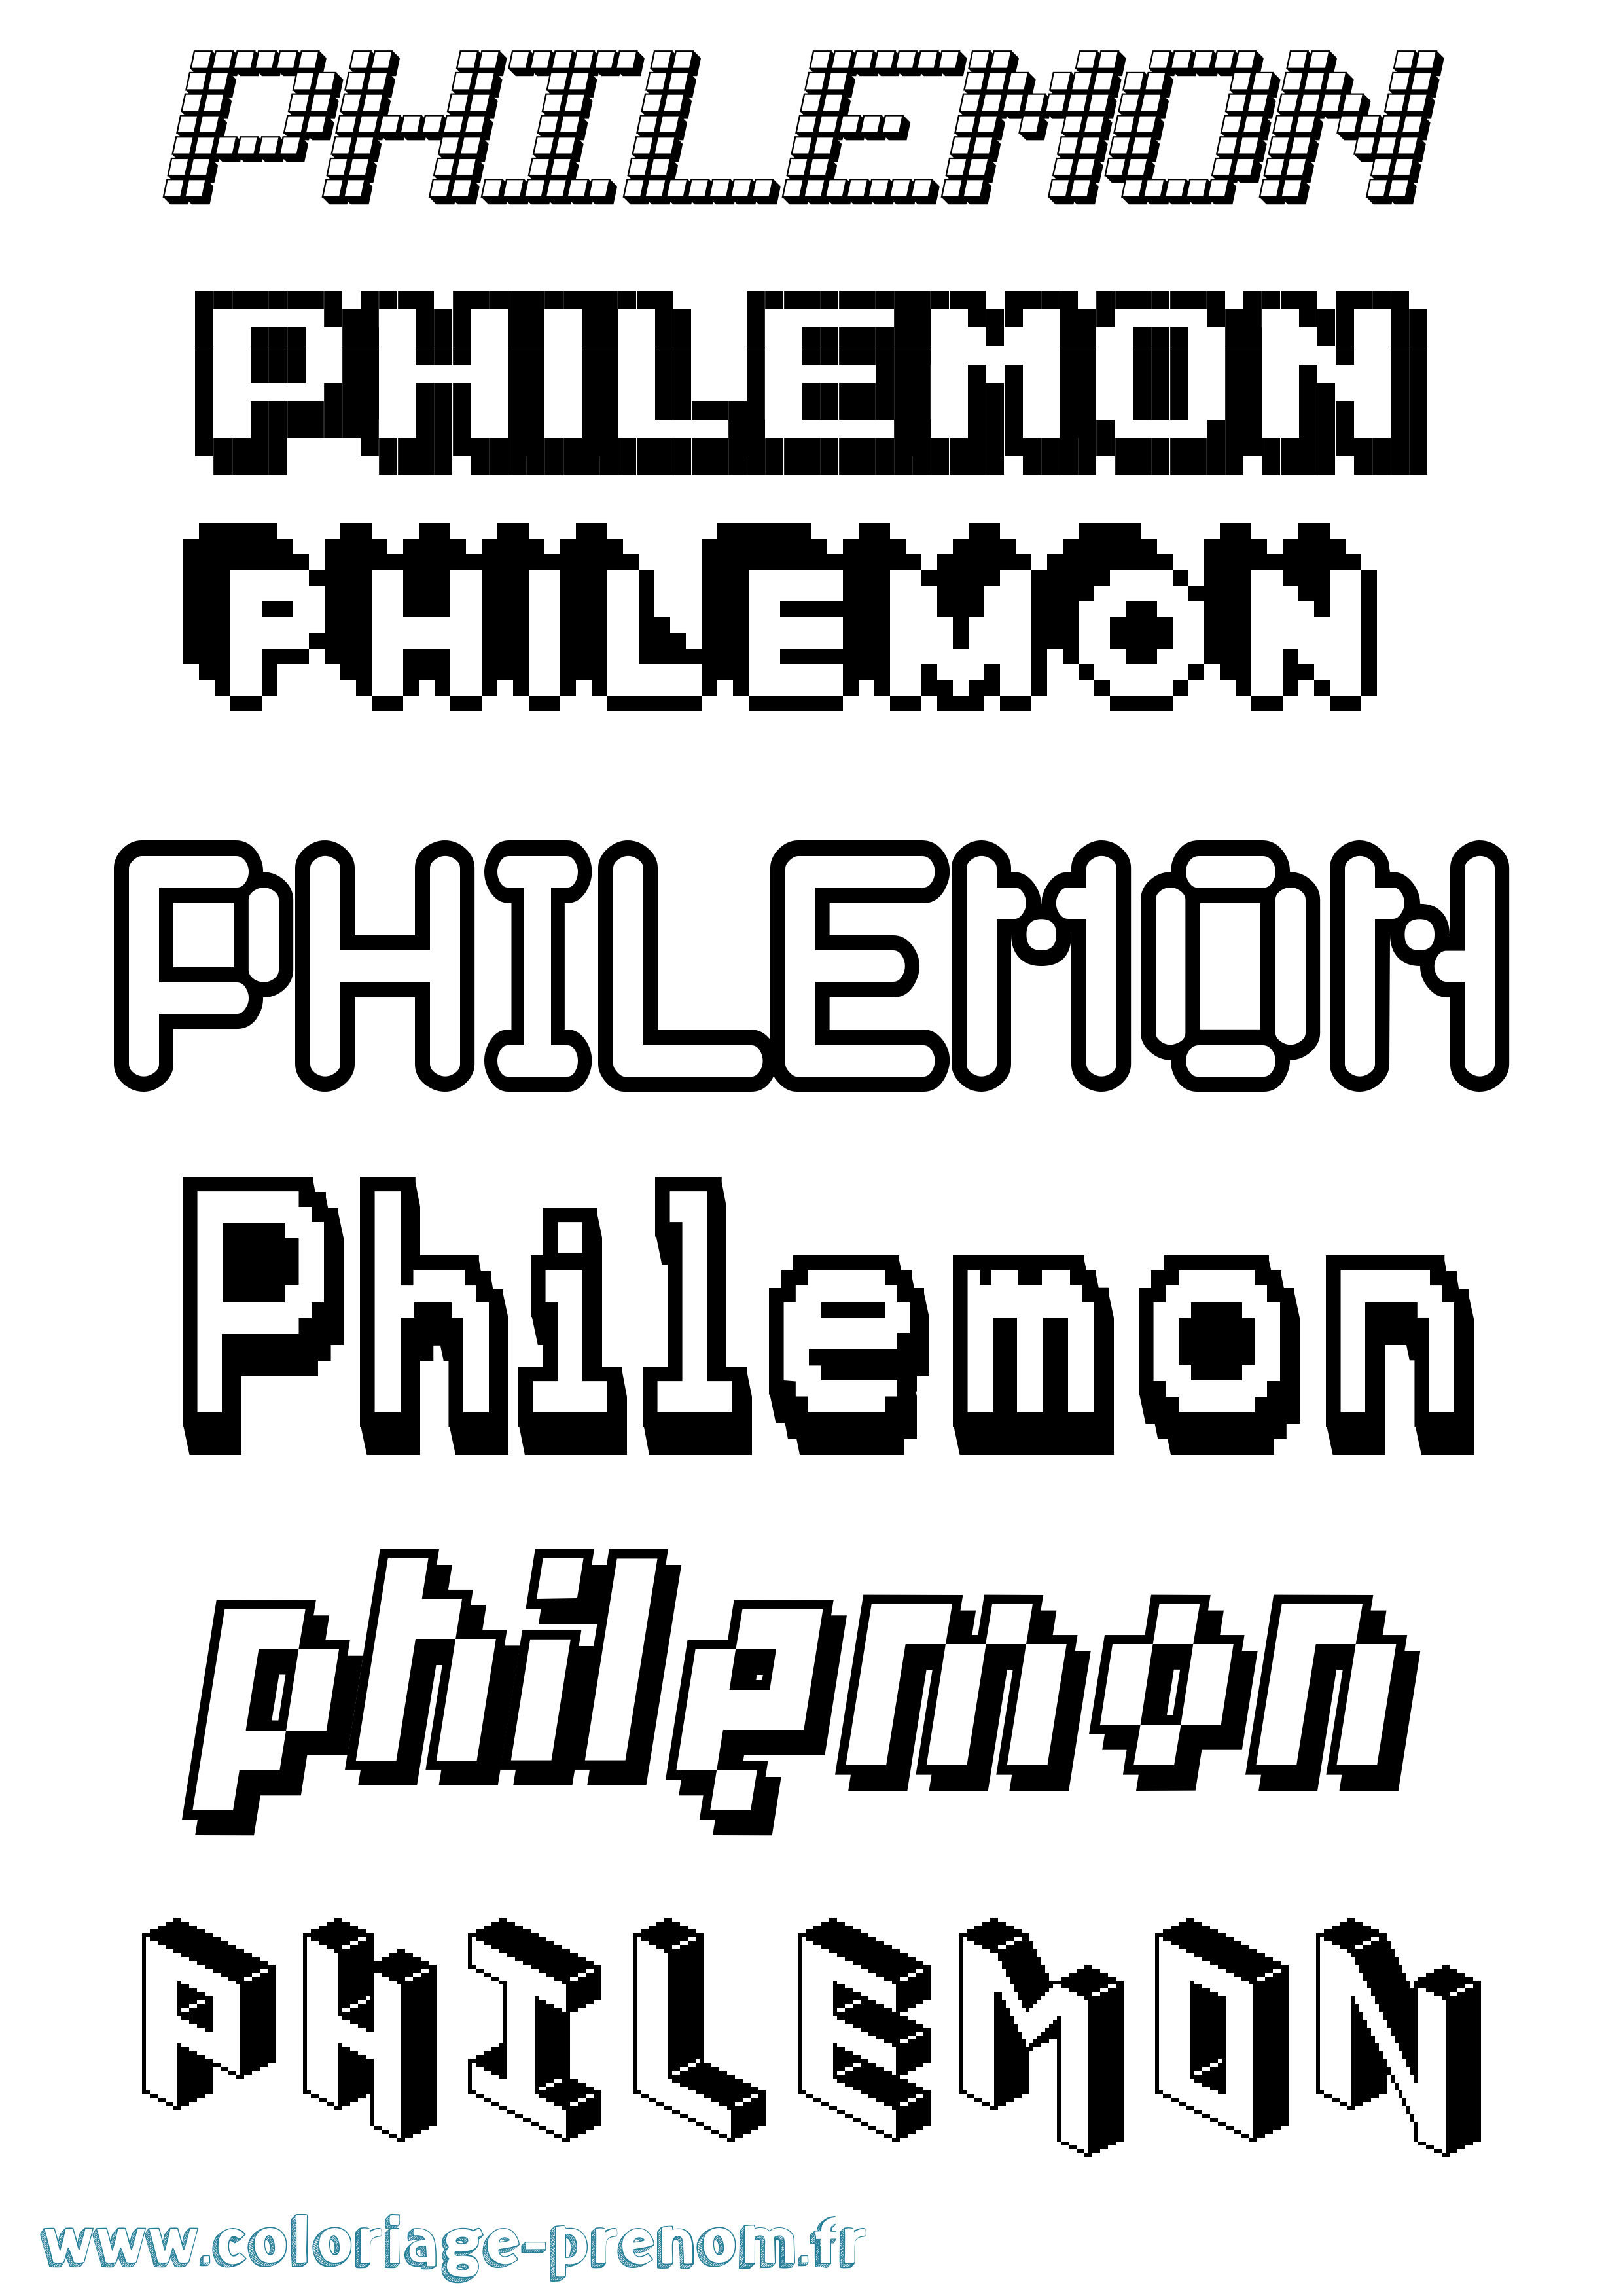 Coloriage prénom Philemon Pixel